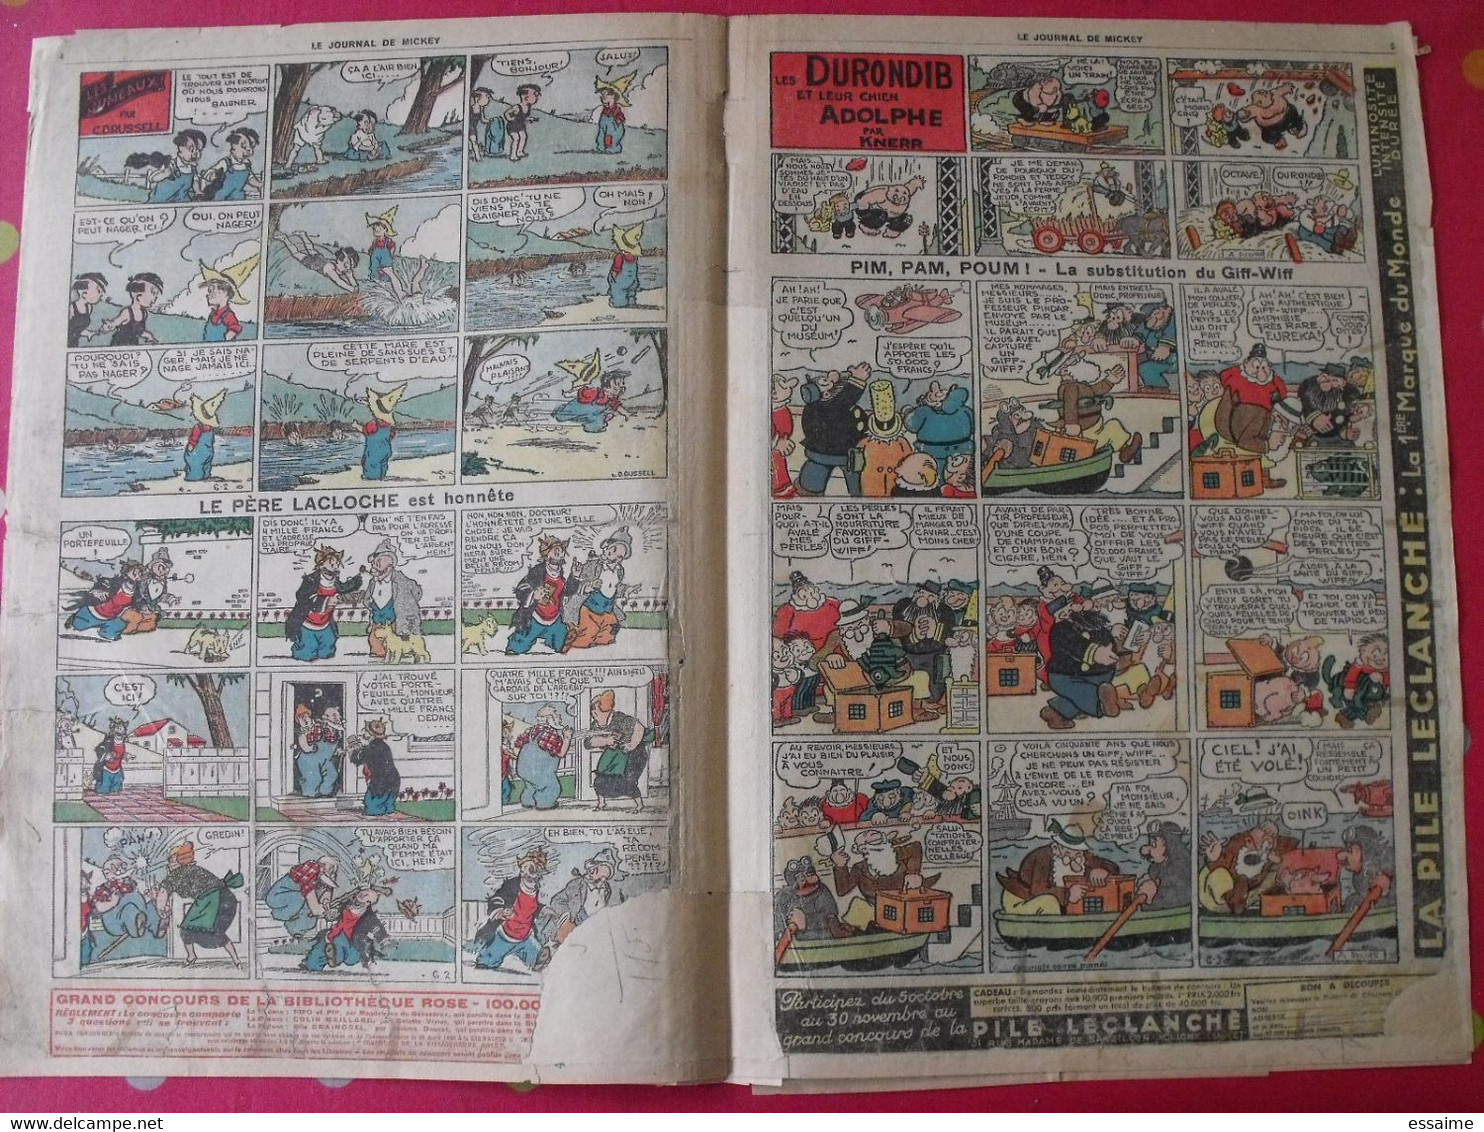 5 n° du journal de Mickey 1935-1936. jojo richard jim la jungle malheurs d'annie donald cora tempête.